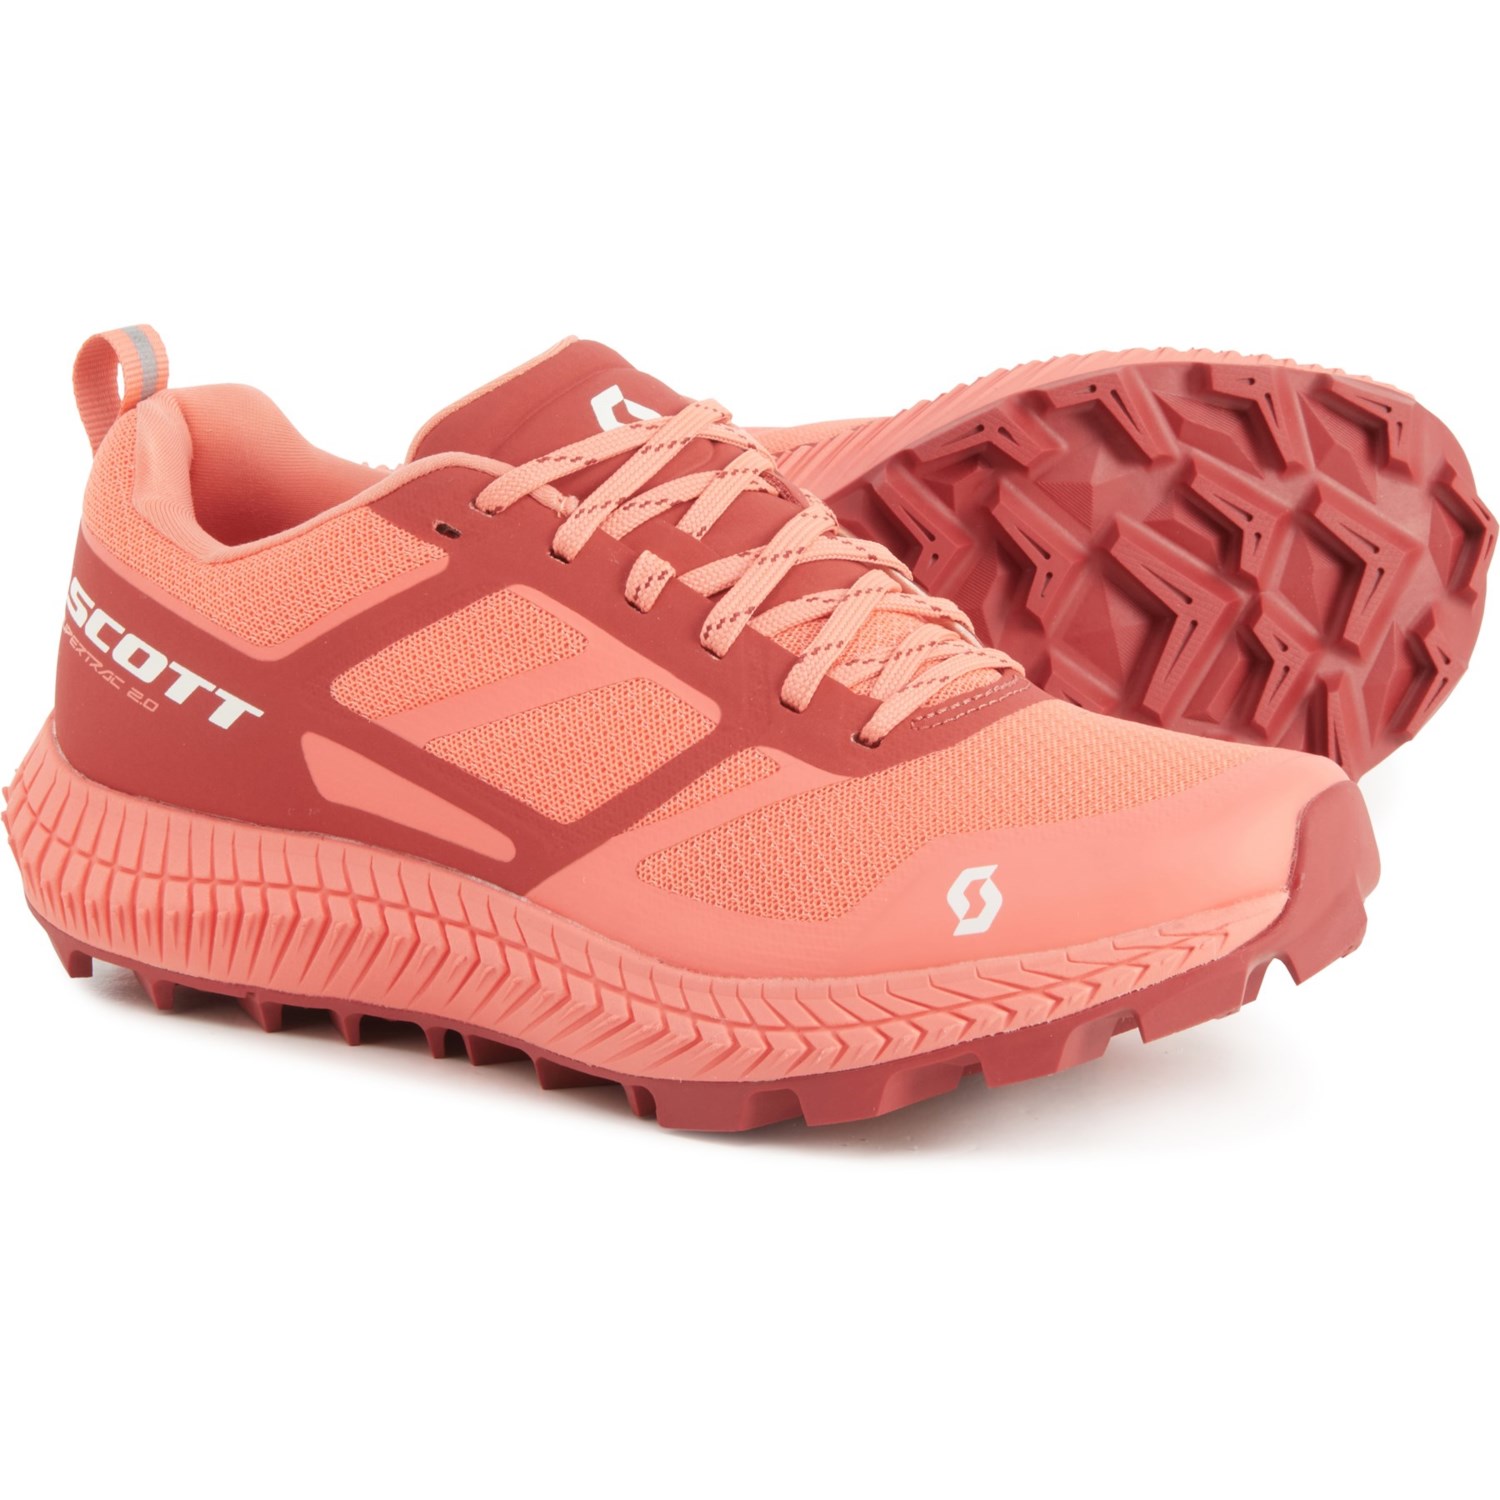 Scott Supertrac 2.0 Trail Running Shoes (For Women)